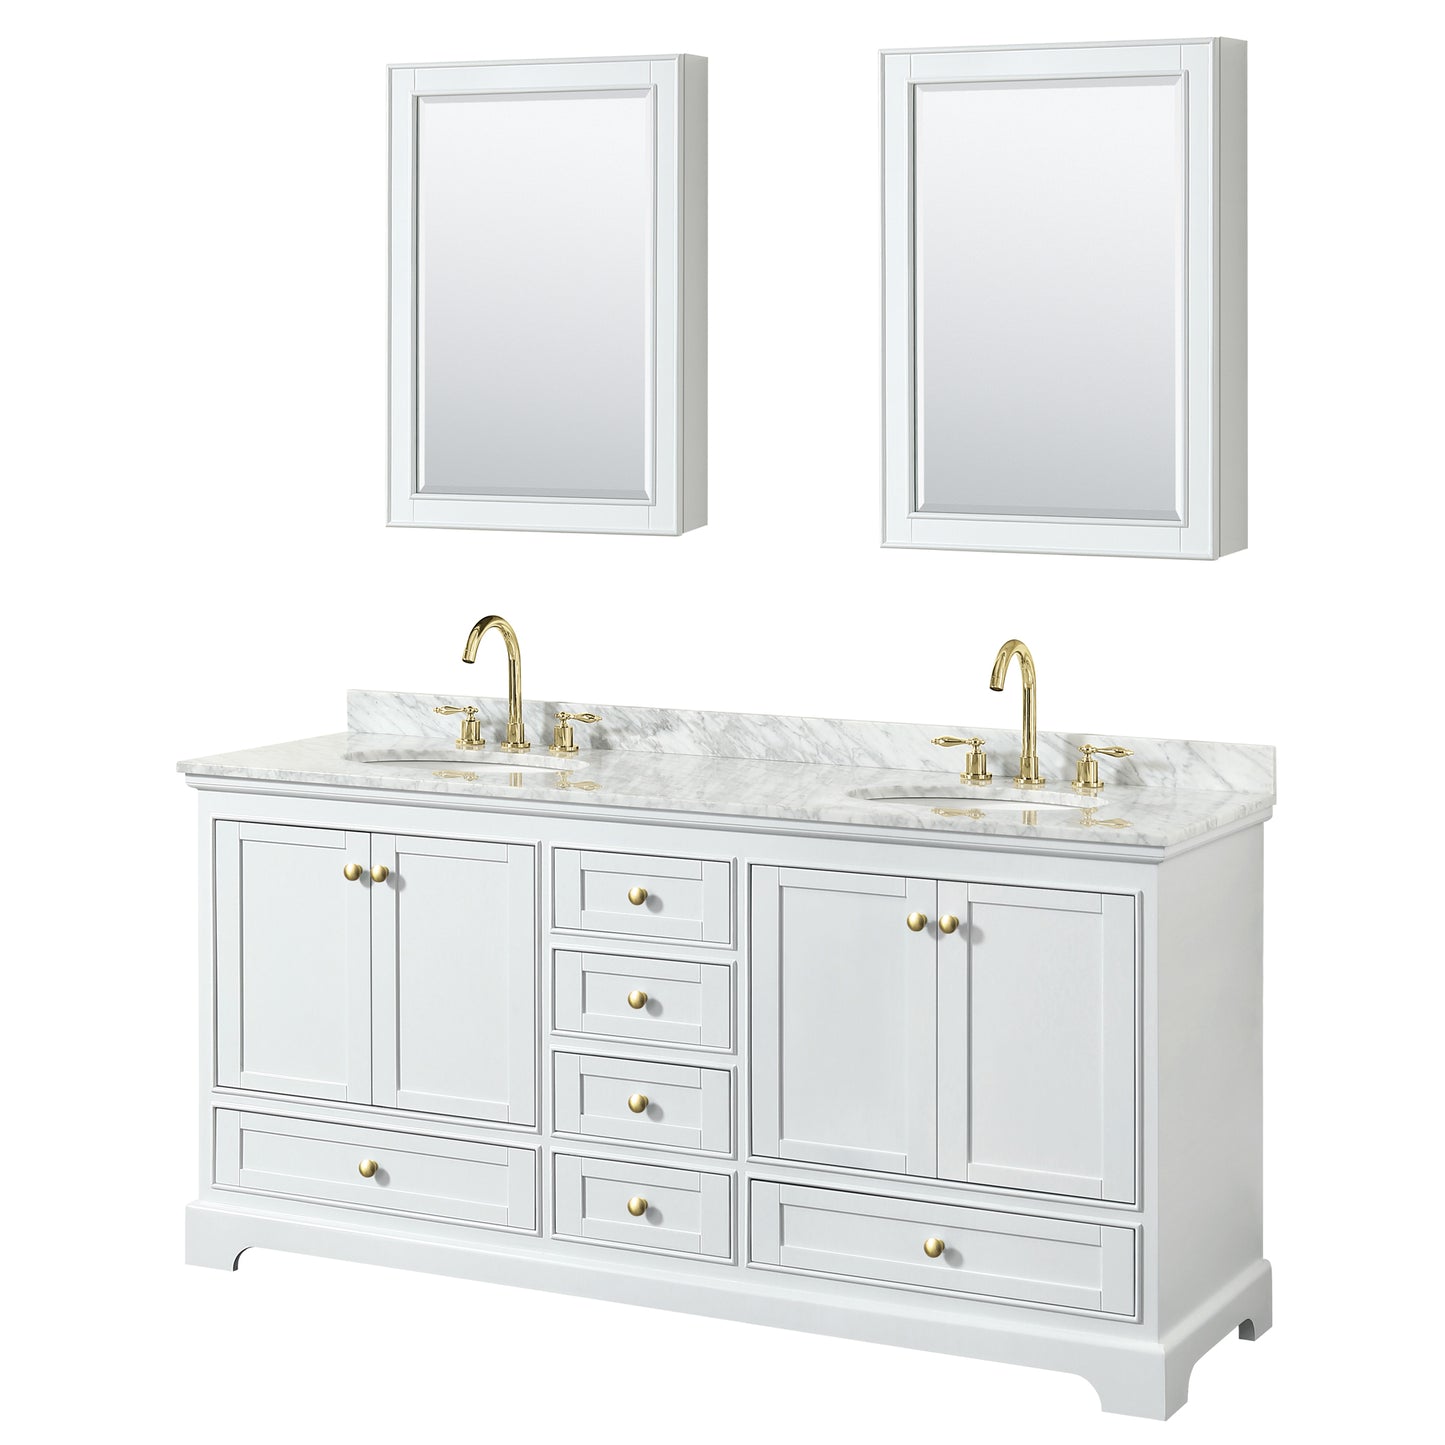 Wyndham Collection Deborah 72 Inch Double Bathroom Vanity in White, White Carrara Marble Countertop, Undermount Oval Sinks, Brushed Gold Trim - Luxe Bathroom Vanities